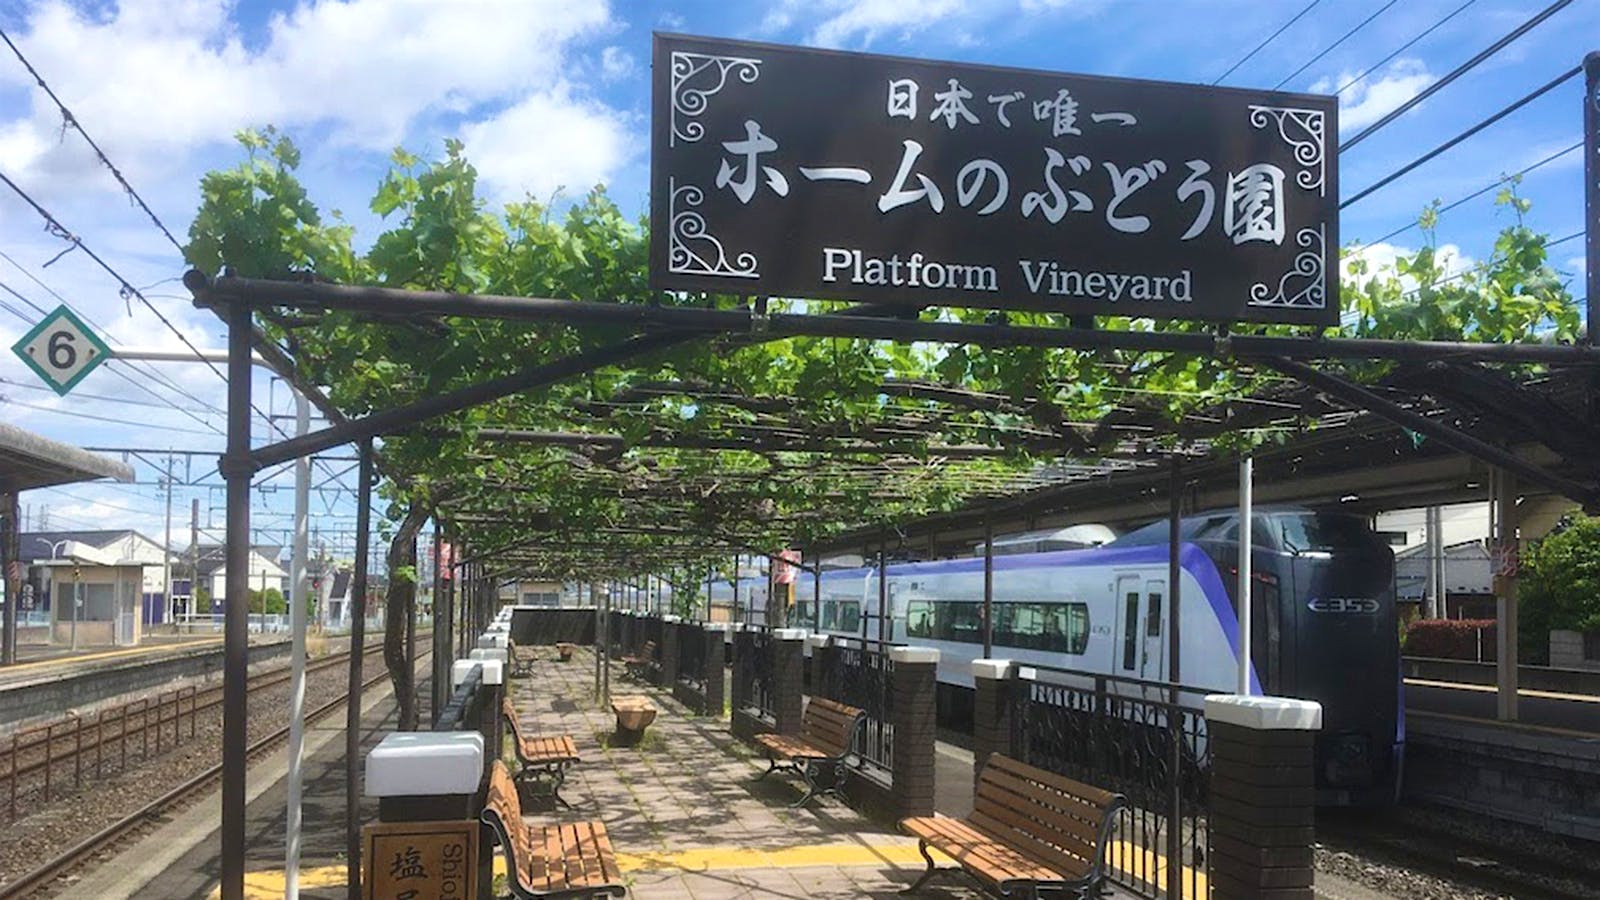 One-of-a-Kind Vineyard in Japan Offers Alternative Interpretation of Vine-Training